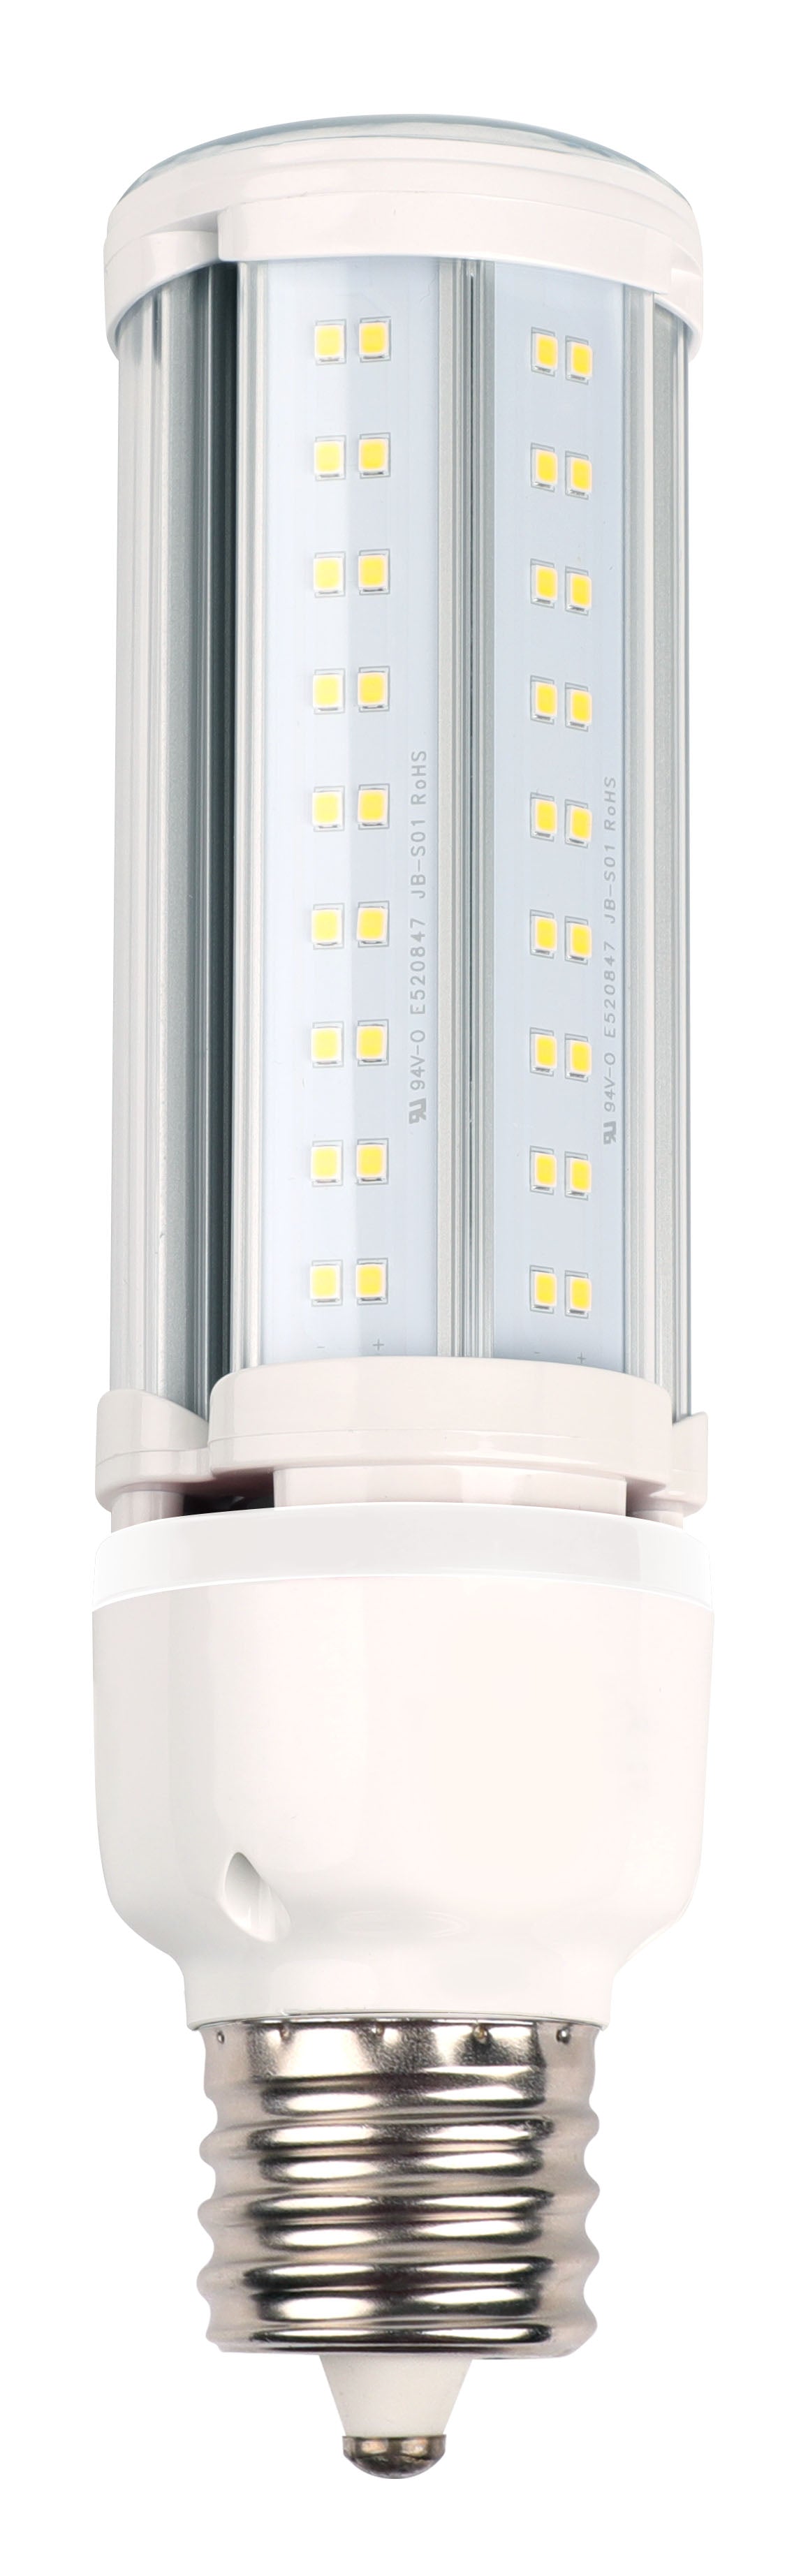 LED Corn Lamp, 27W, 4180 Lumens, 5000K CCT, EX39 Base; 120-277V